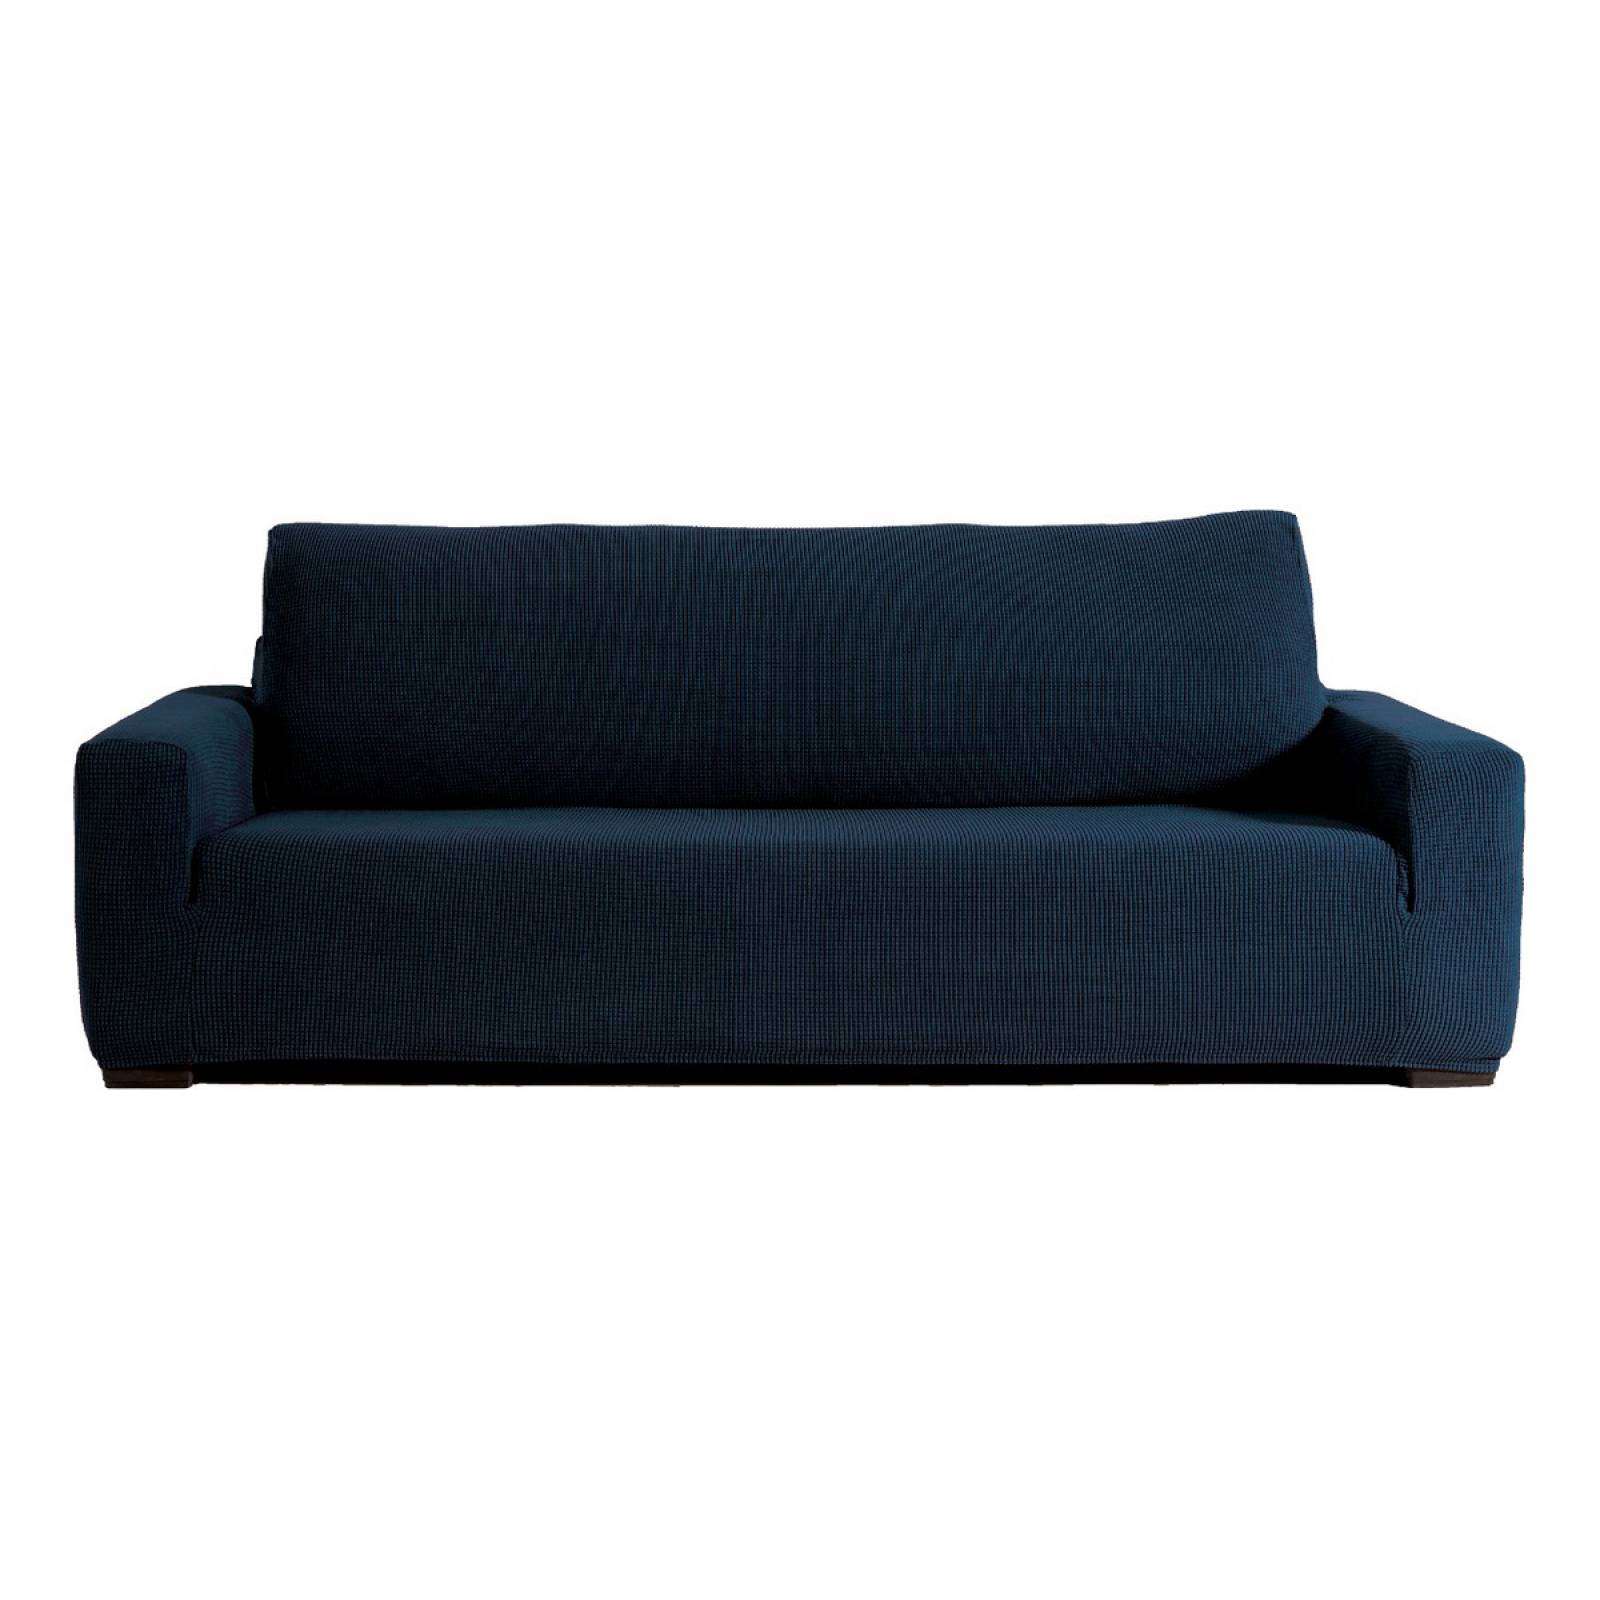 Funda de sofá elastica Begoña c/ lino de 4 plazas